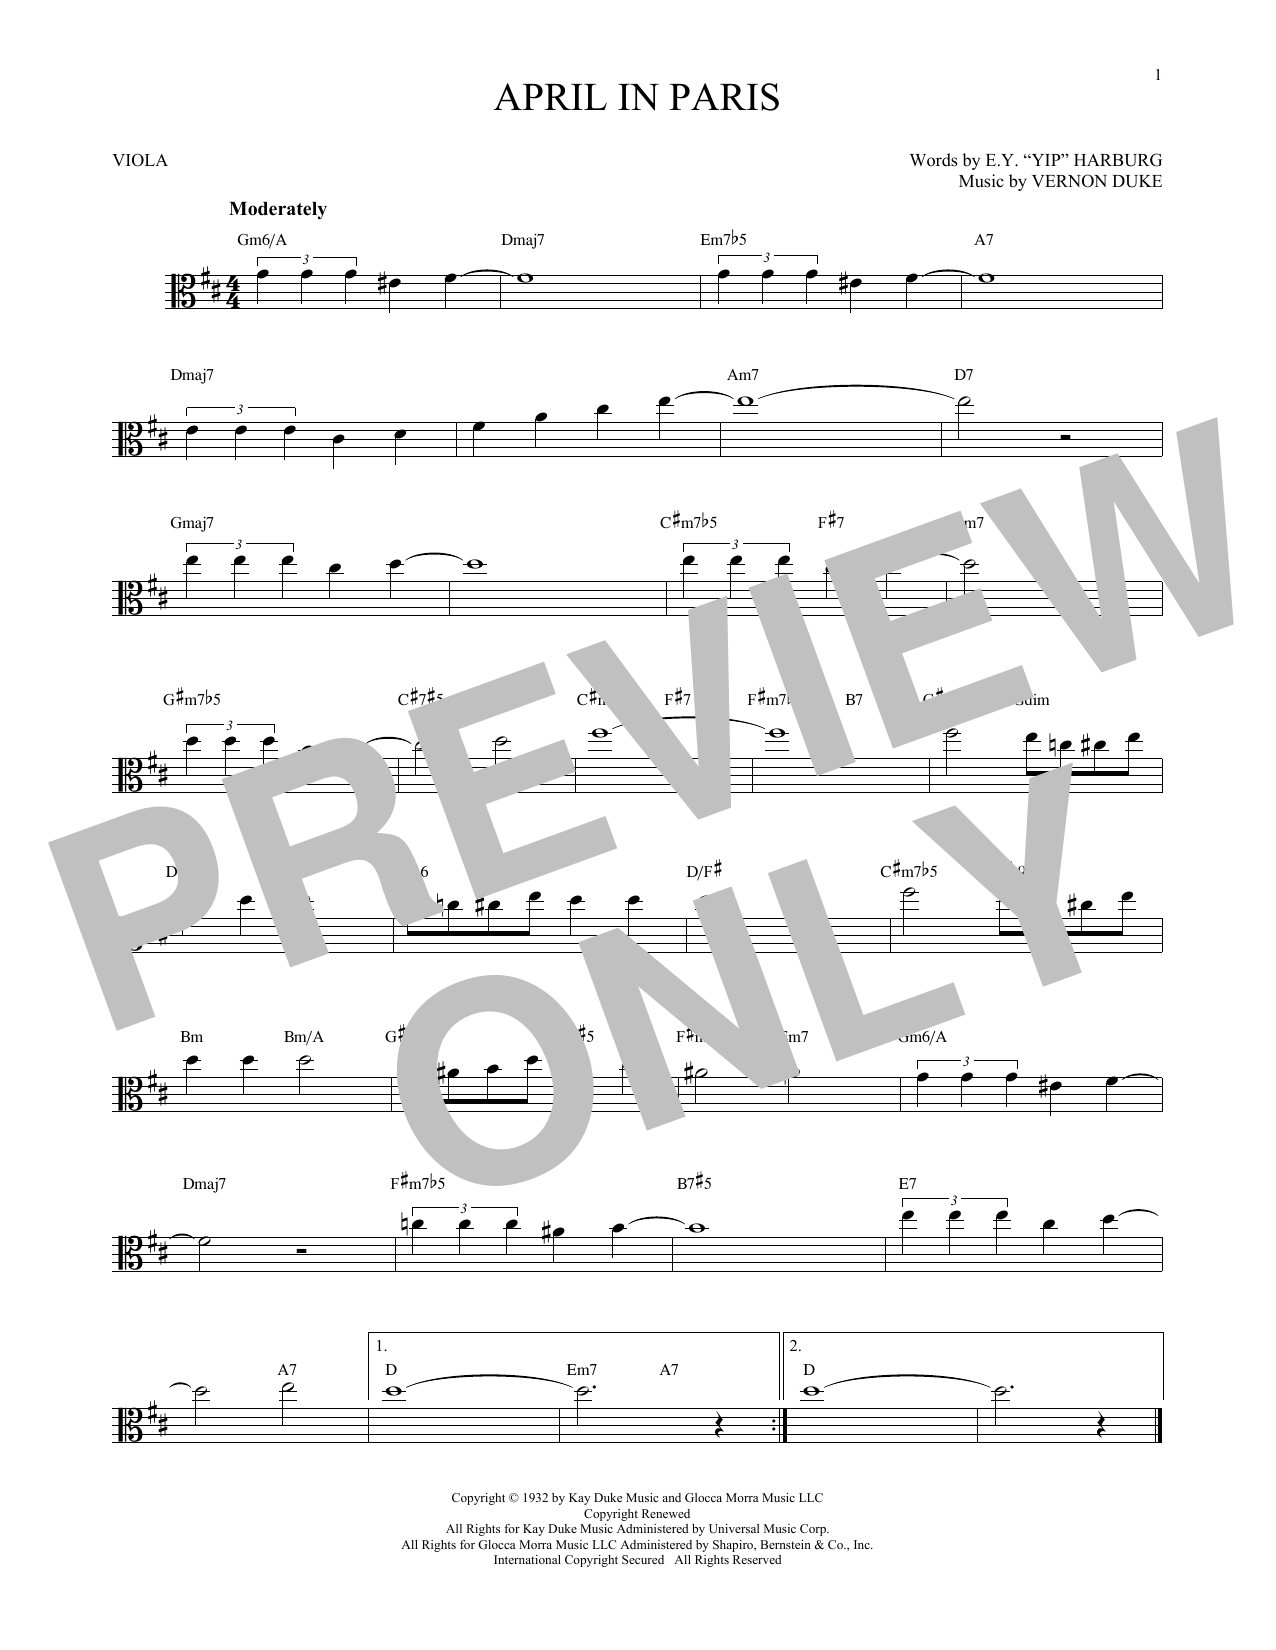 Vernon Duke April In Paris Sheet Music Notes & Chords for Cello - Download or Print PDF